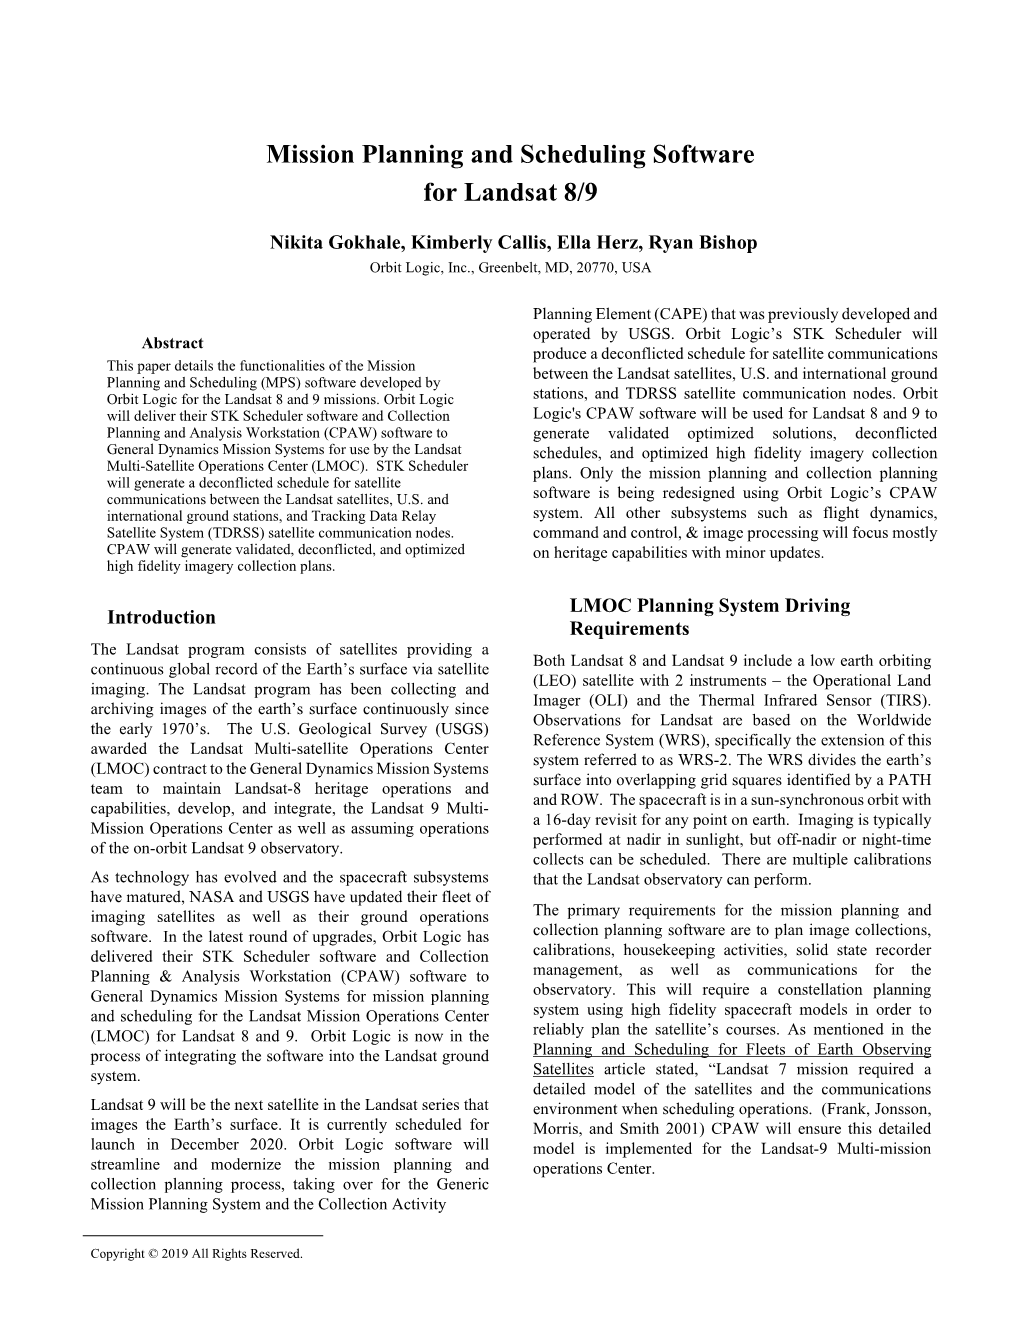 Mission Planning and Scheduling Software for Landsat 8/9